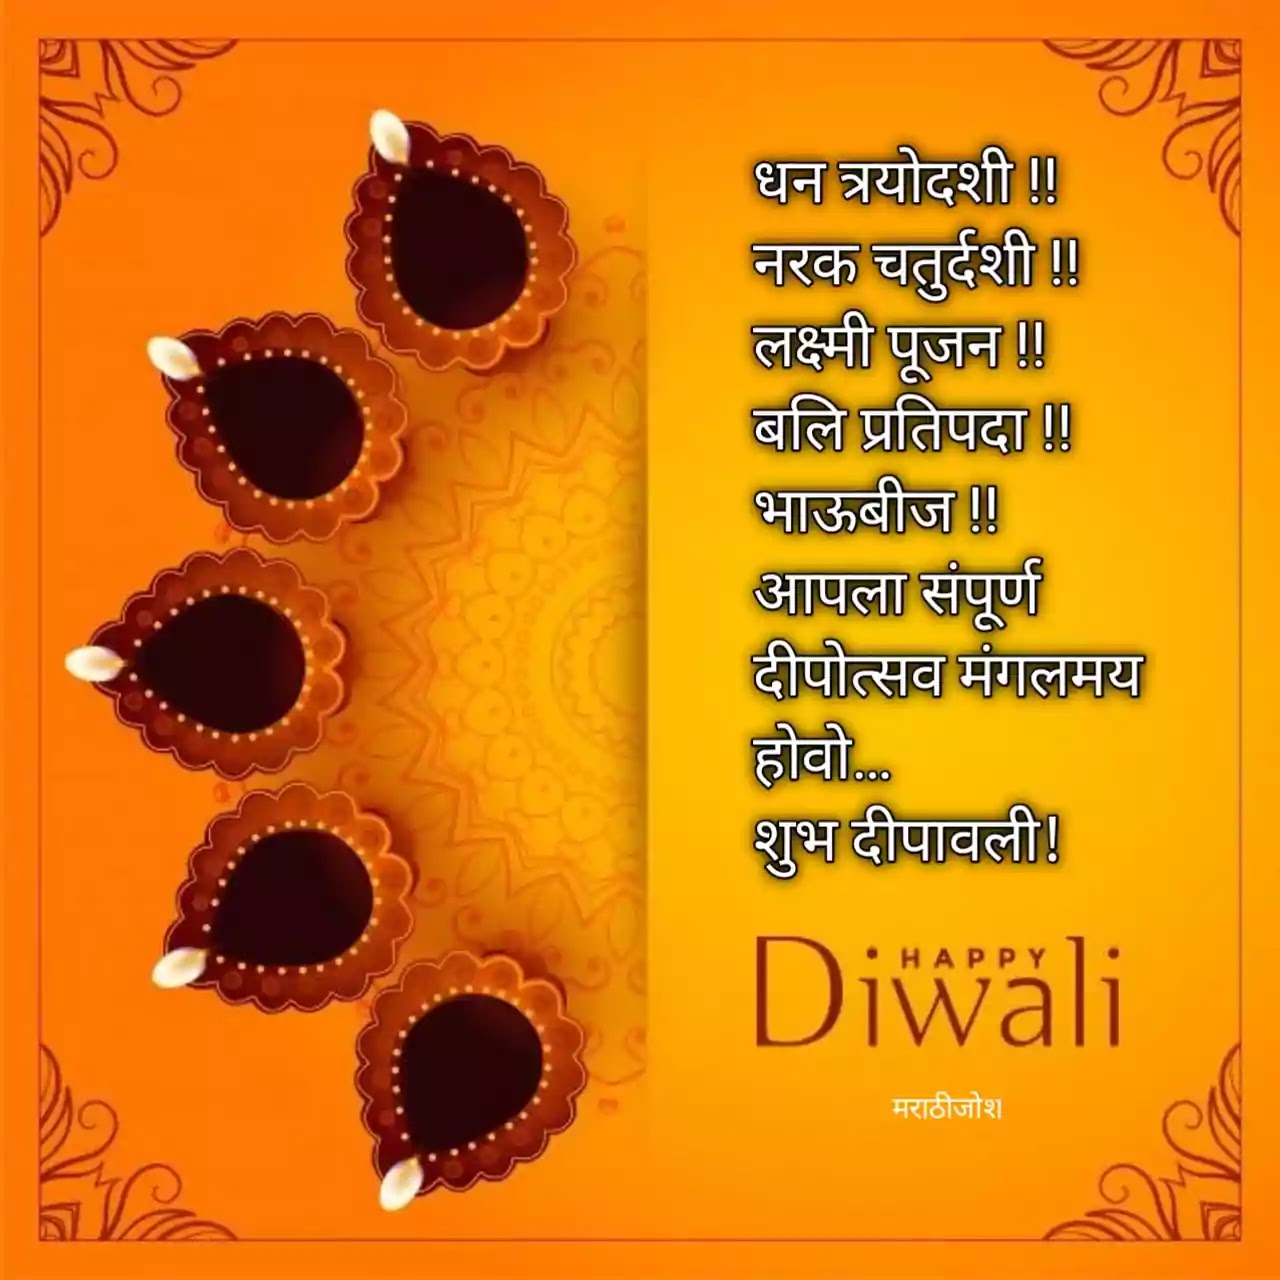 Happy diwali images in marathi